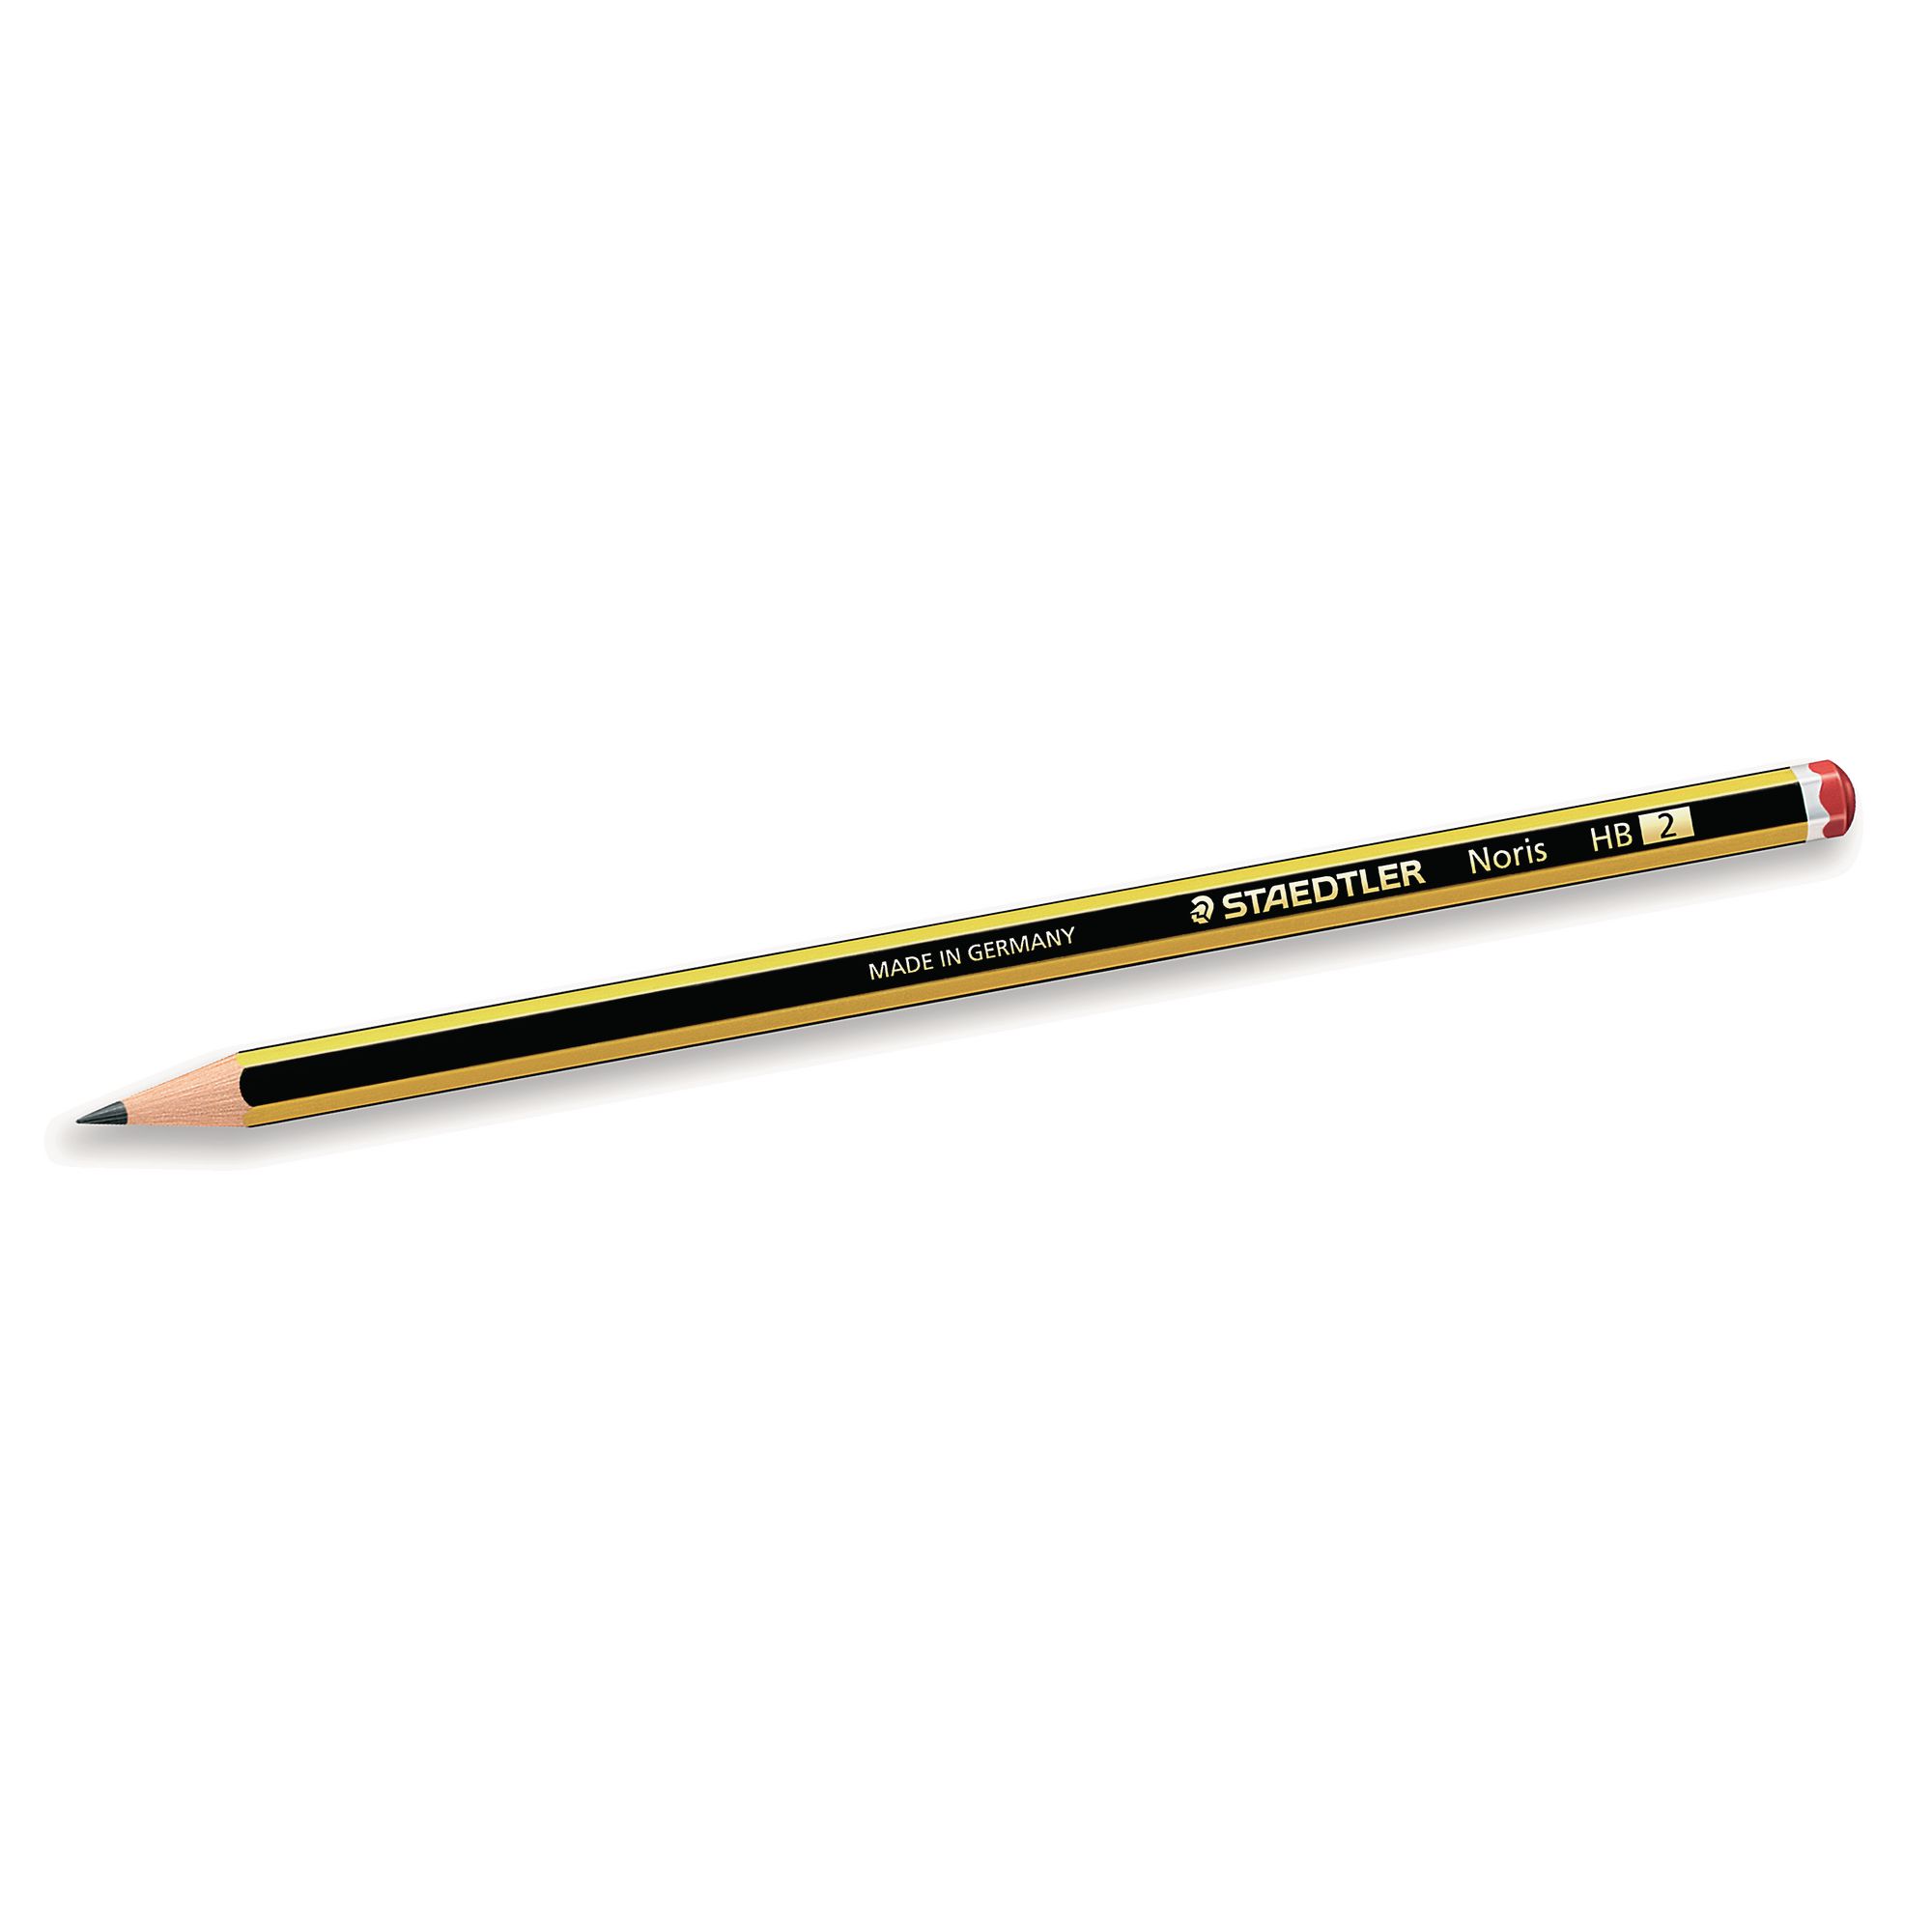 b pencil